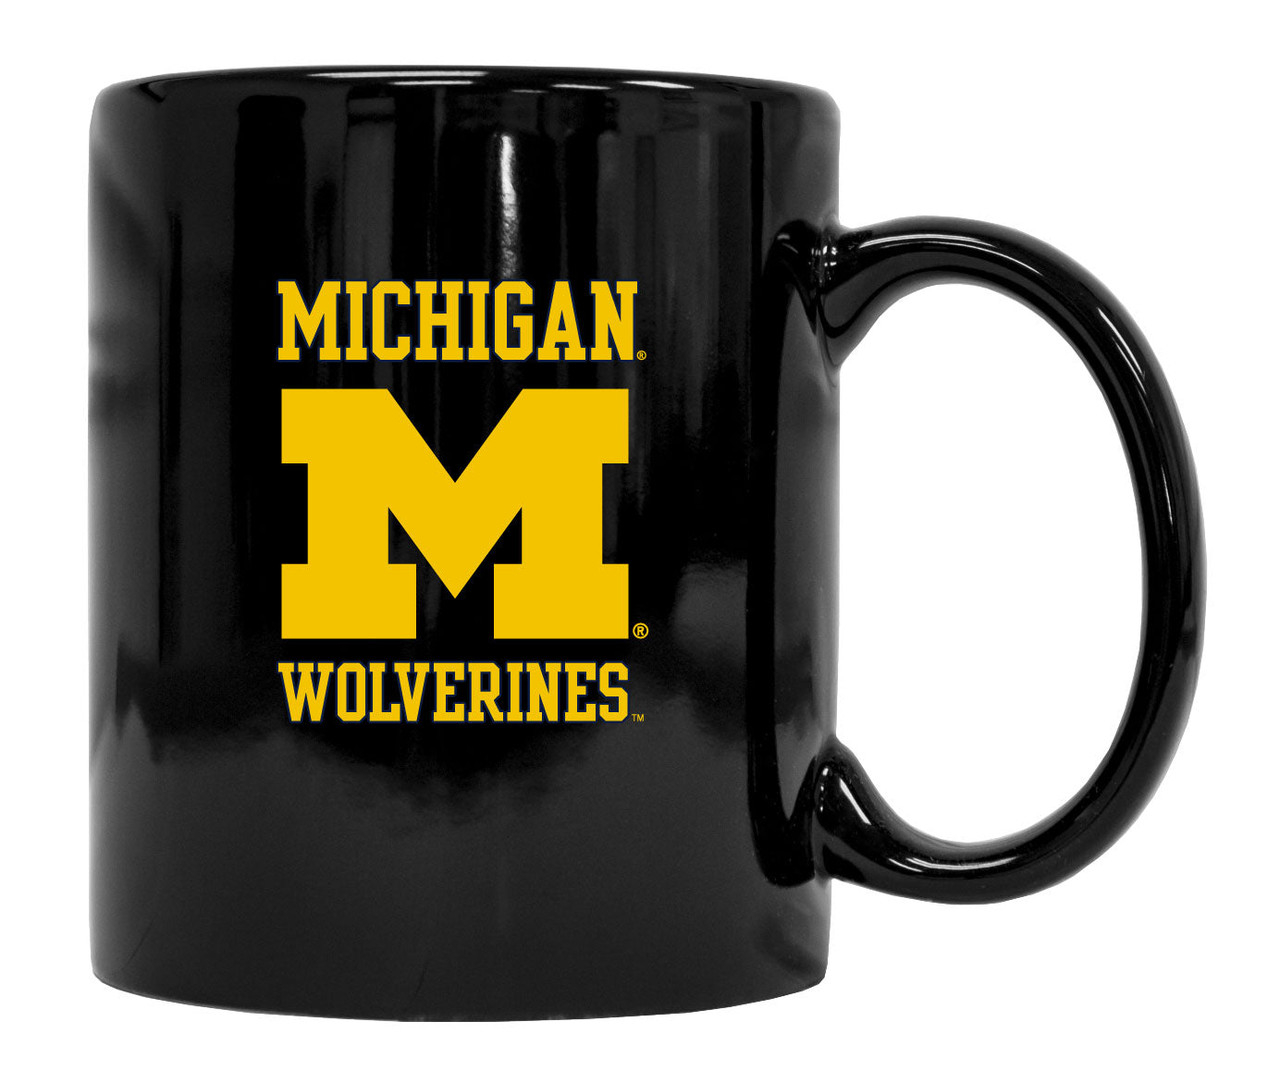 Michigan Wolverines Black Ceramic Mug (Black).